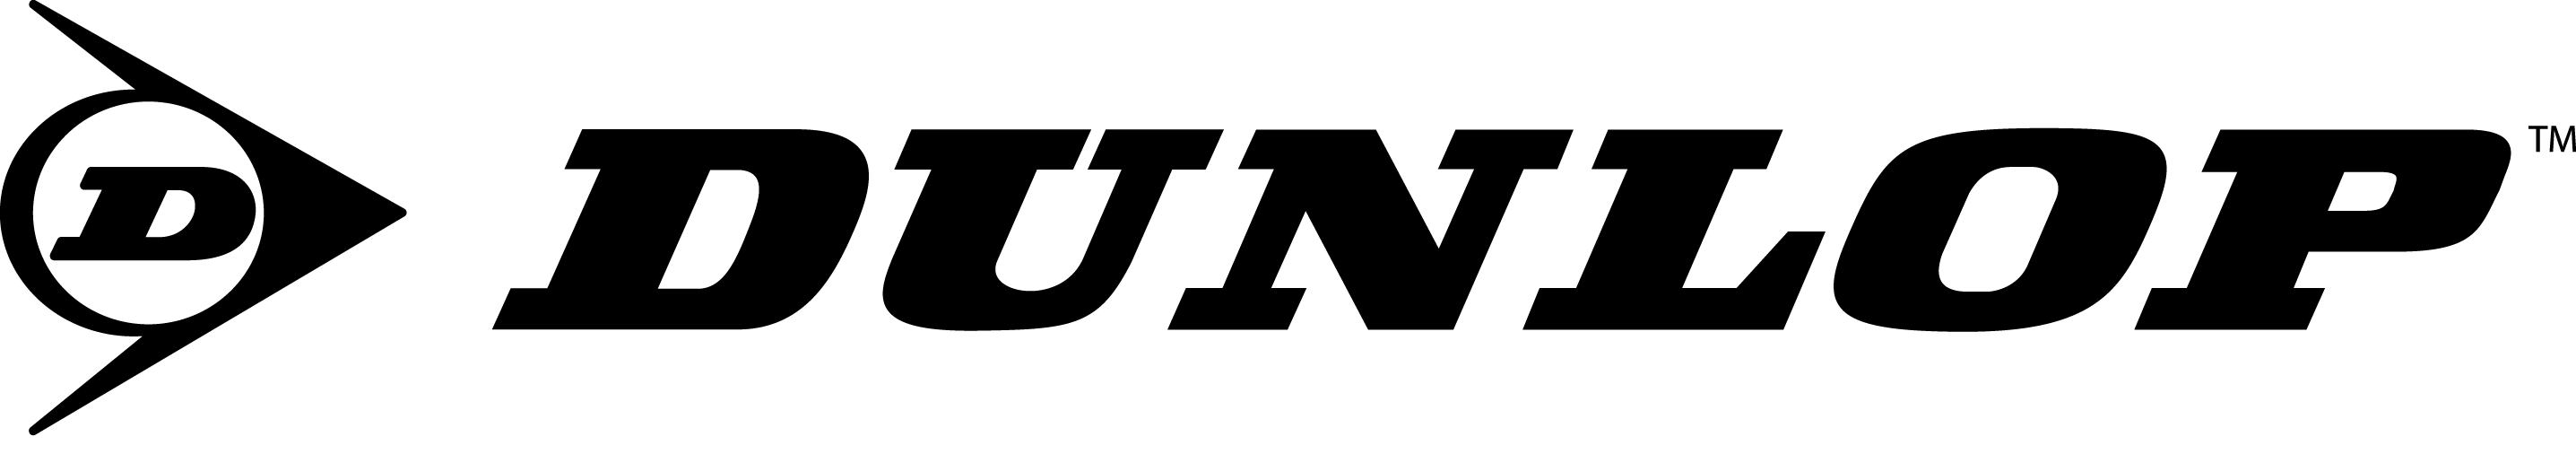 Pneus continental Logo